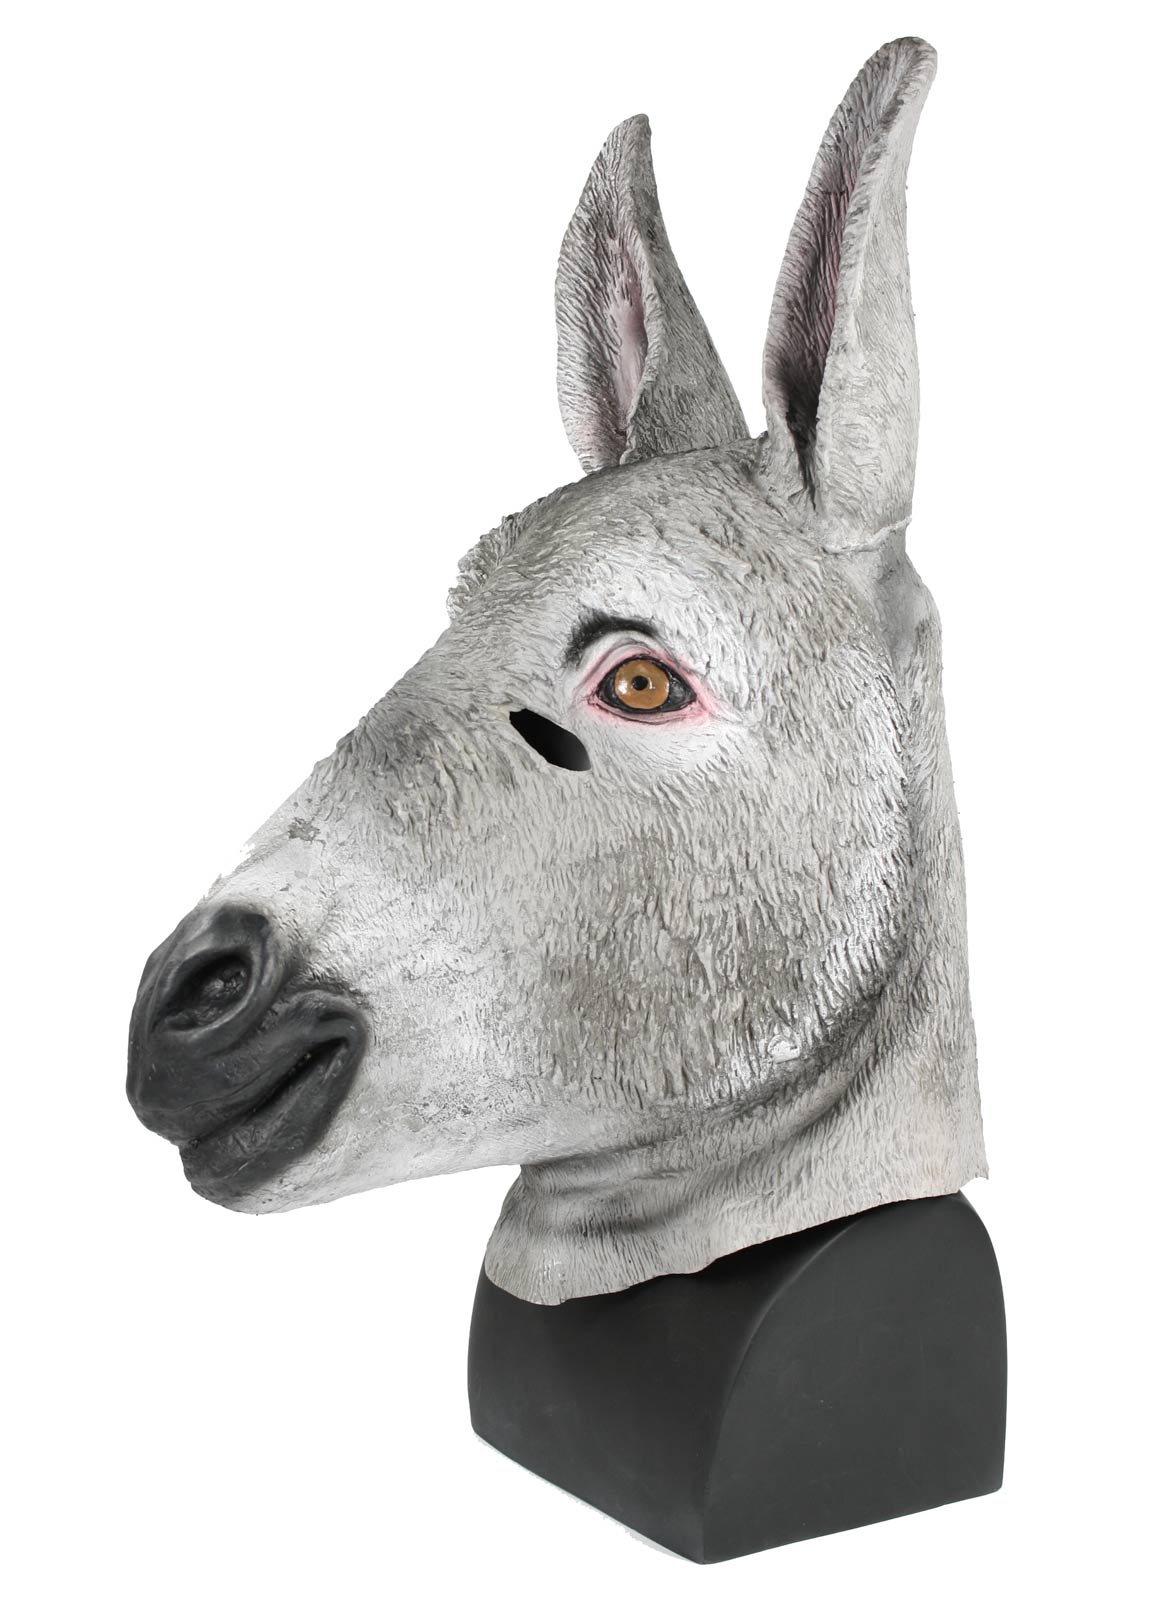 DONKEY Mule JACKASS Democrat Party Head Soft Rubber Costume Mask | eBay